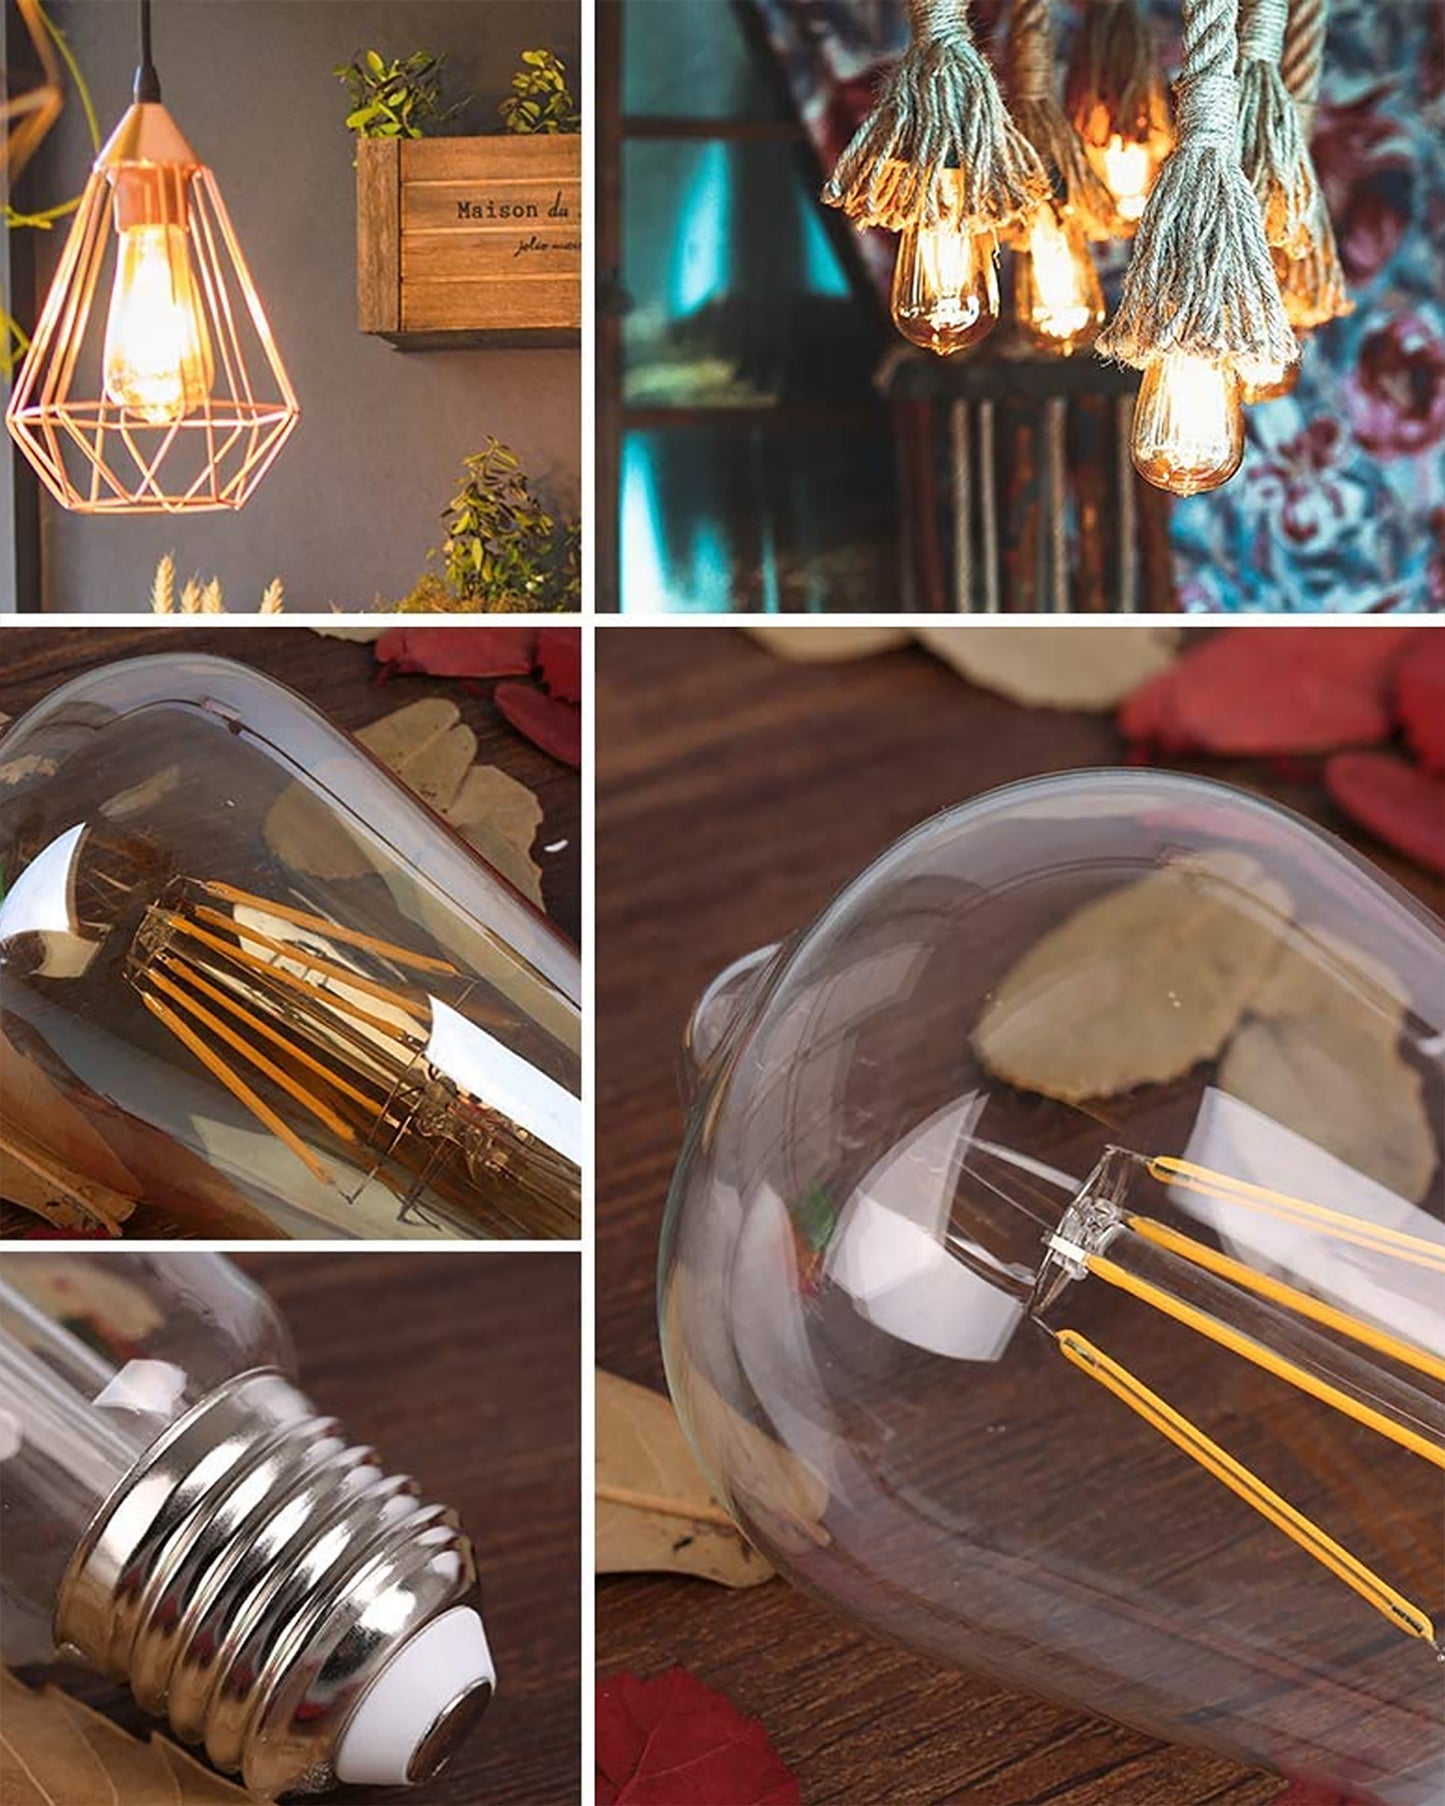 ST64 Pear Shape Filament LED Bulb, 4 Watt, Industrial Decorative Vintage Light Lamp, Set of 2